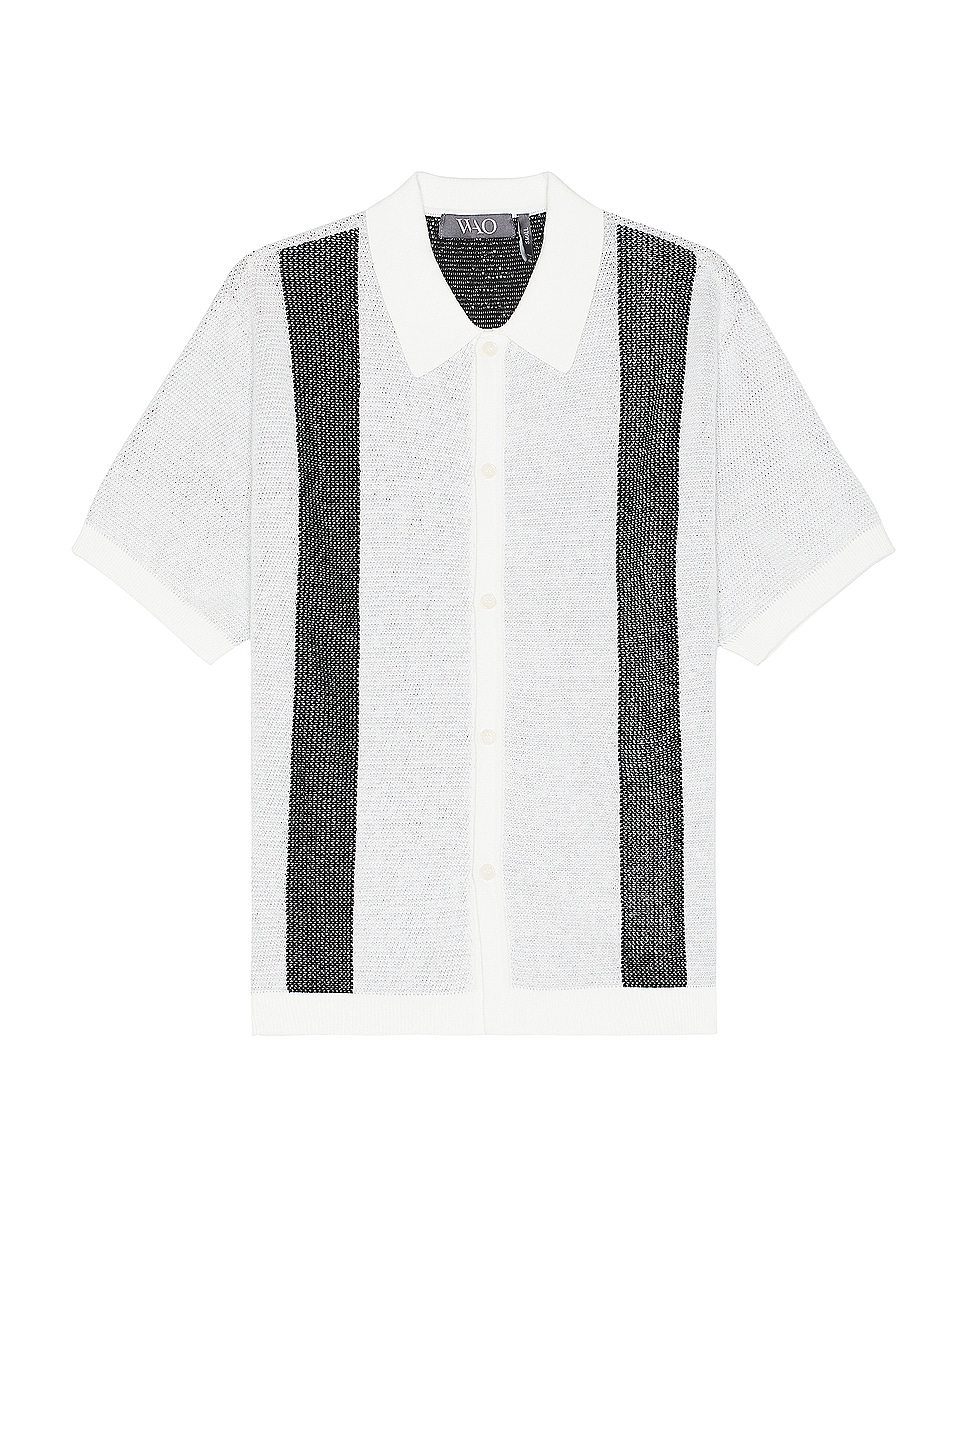 Image 1 of WAO Short Sleeve Knit Shirt in White & Black